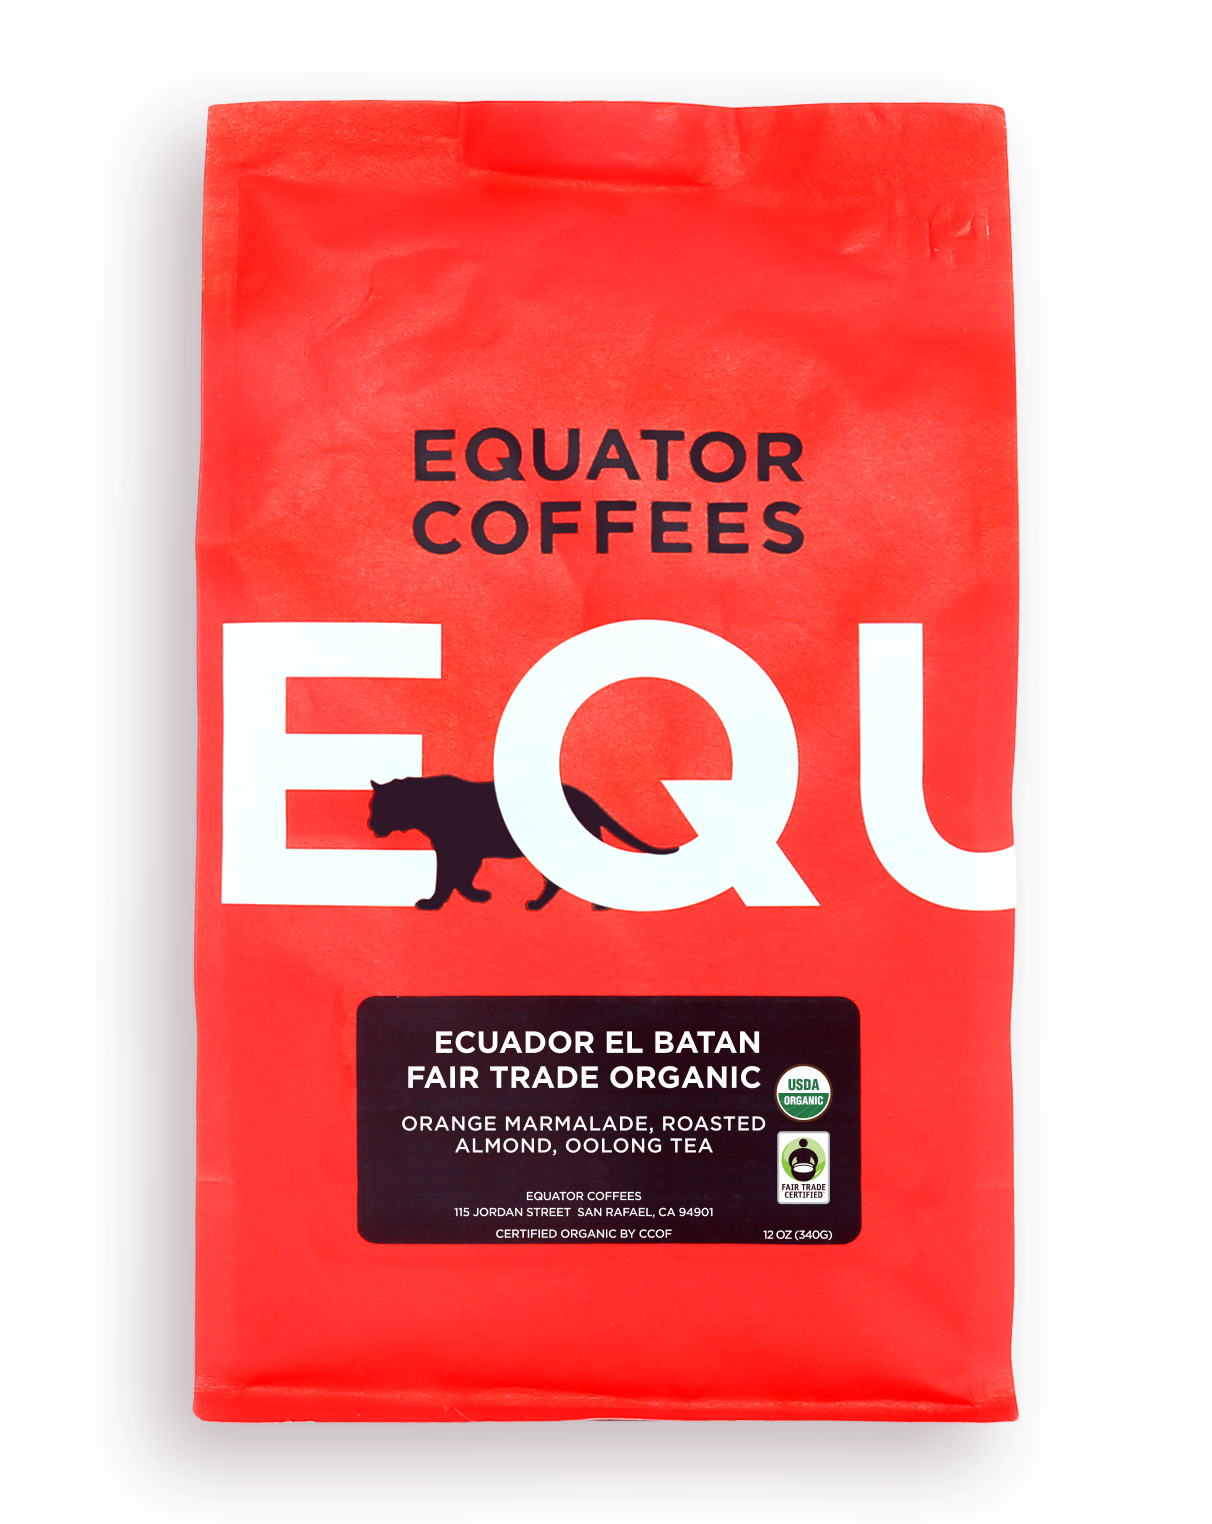 Ecuador El Batan Fair Trade Organic